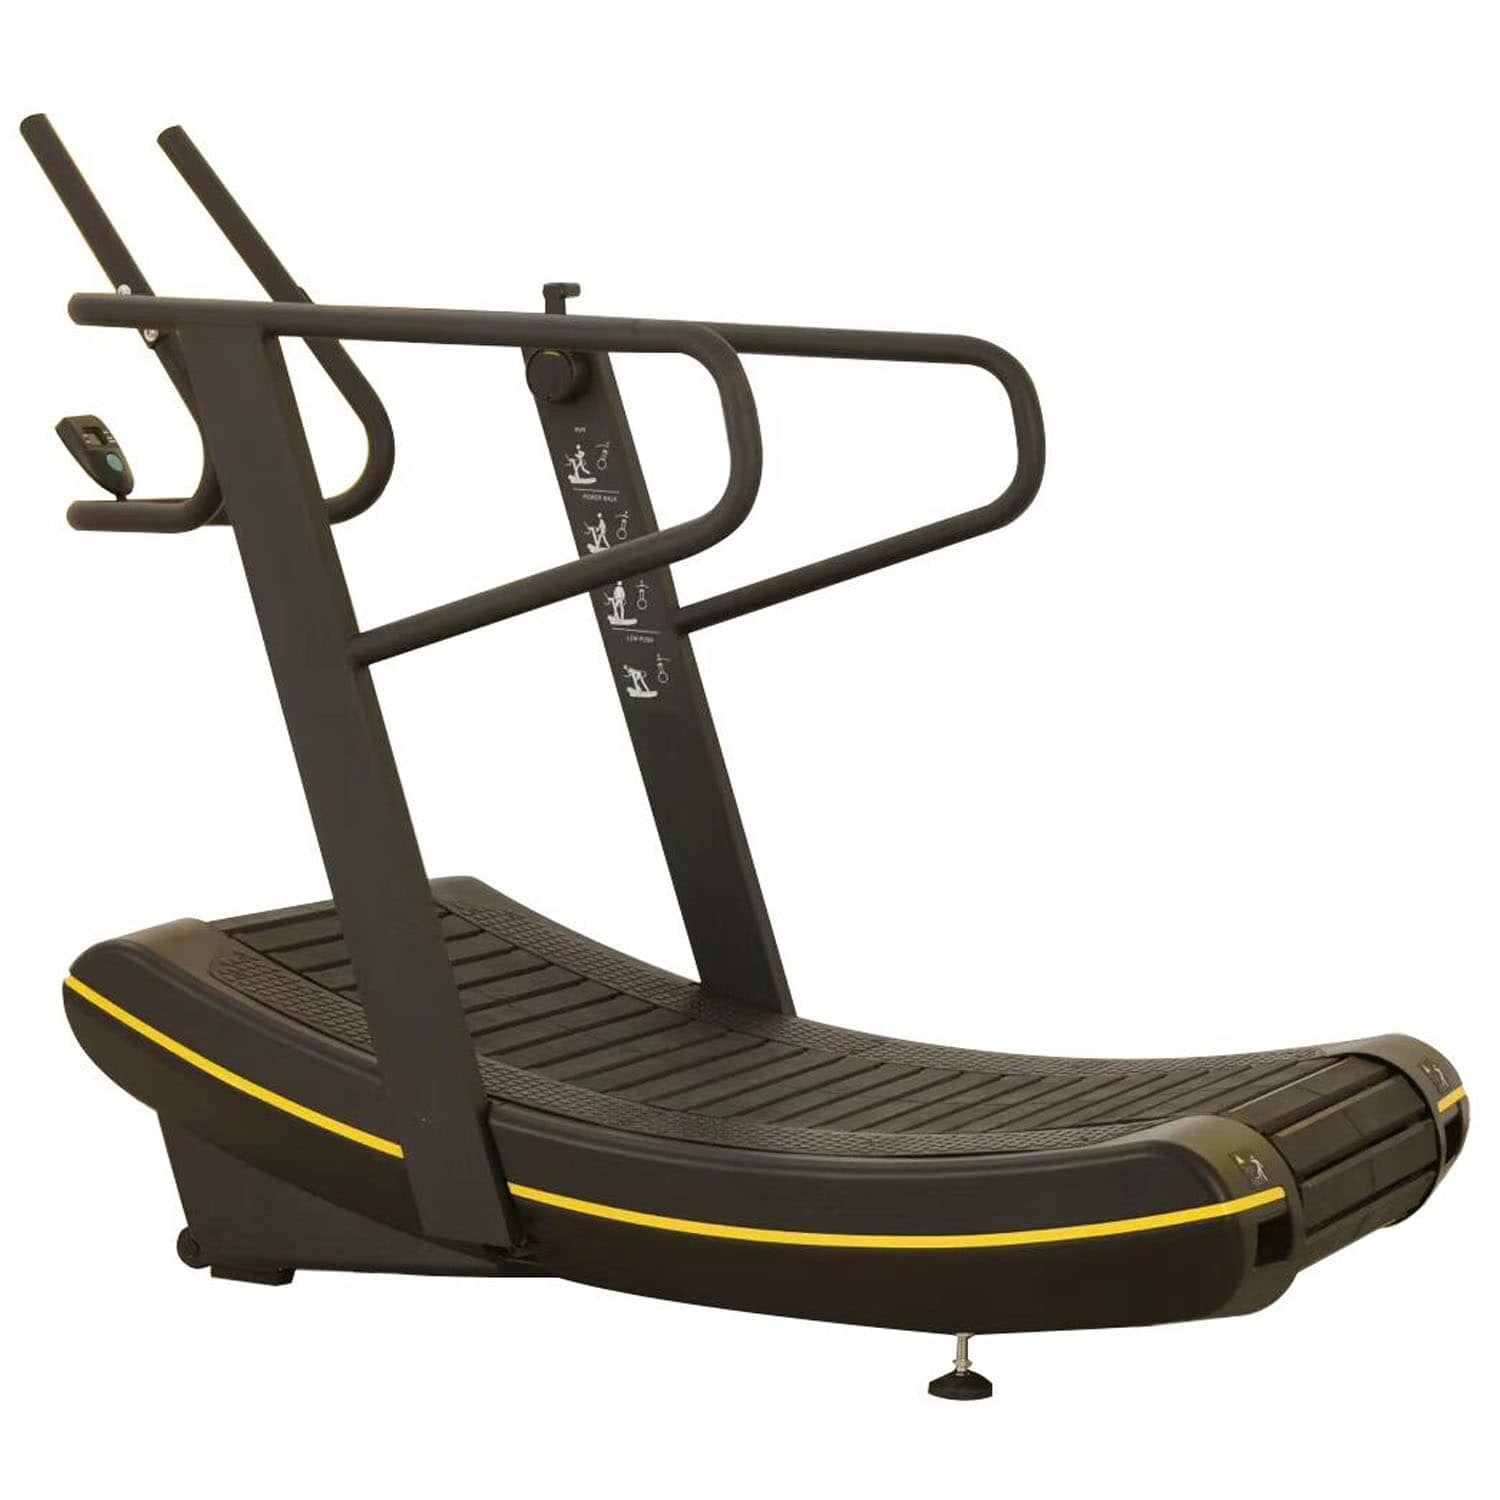 Afton Commercial Curve Treadmill JG9700